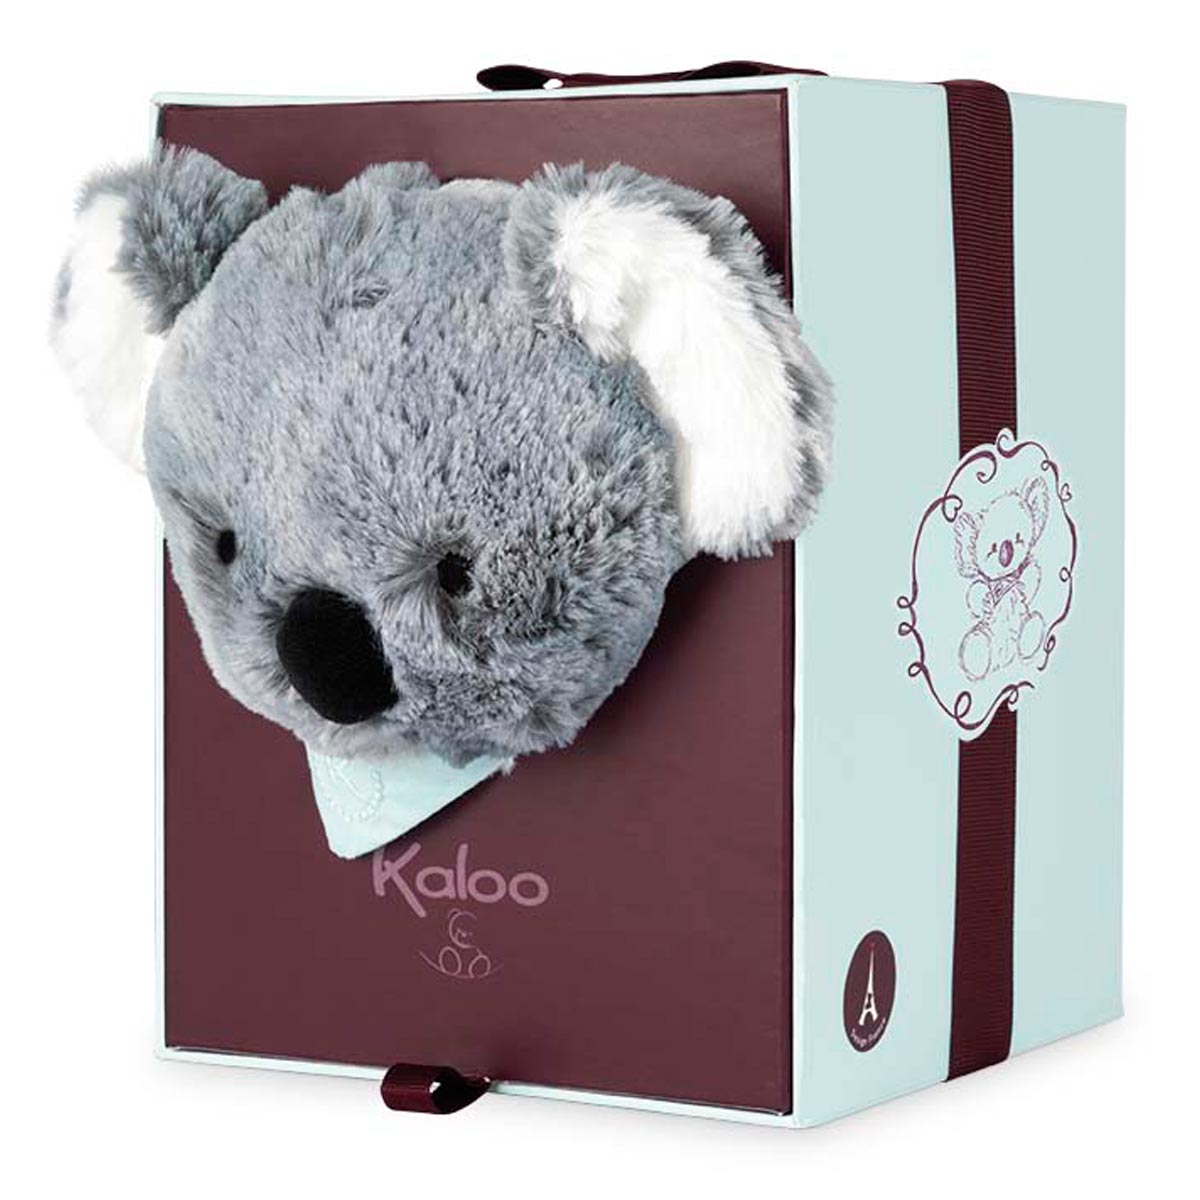 Kaloo Les Amis Chouchou the Koala -19 cm